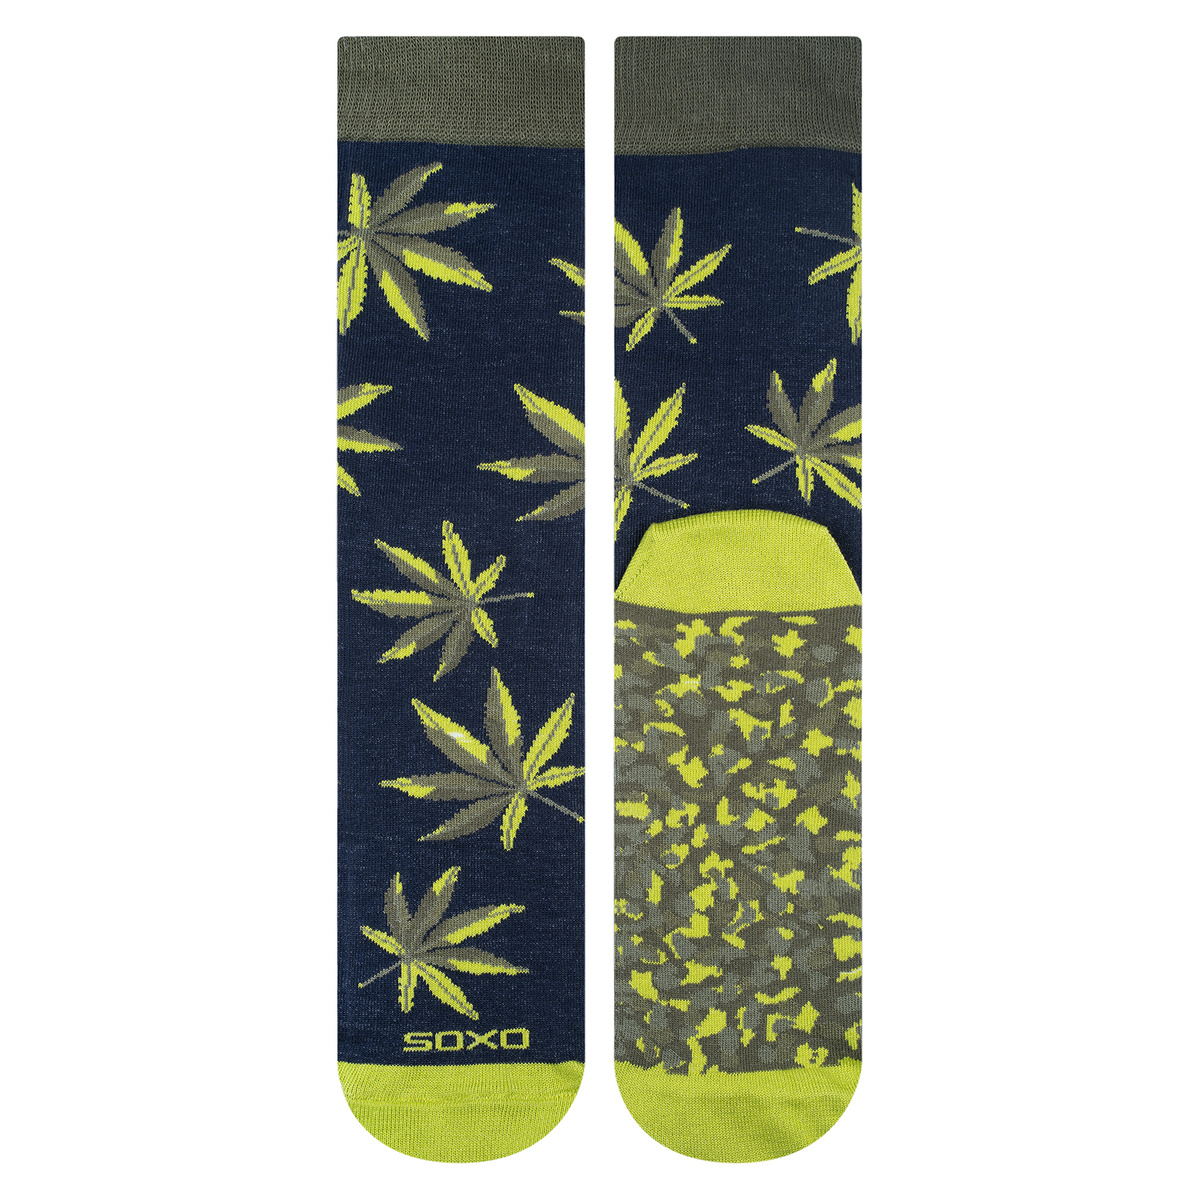 Digno chorro Aislar Calcetines coloridos de SOXO GOOD STUFF marijuana en un frasco de algodón -  12,99 € | Tienda online SOXO